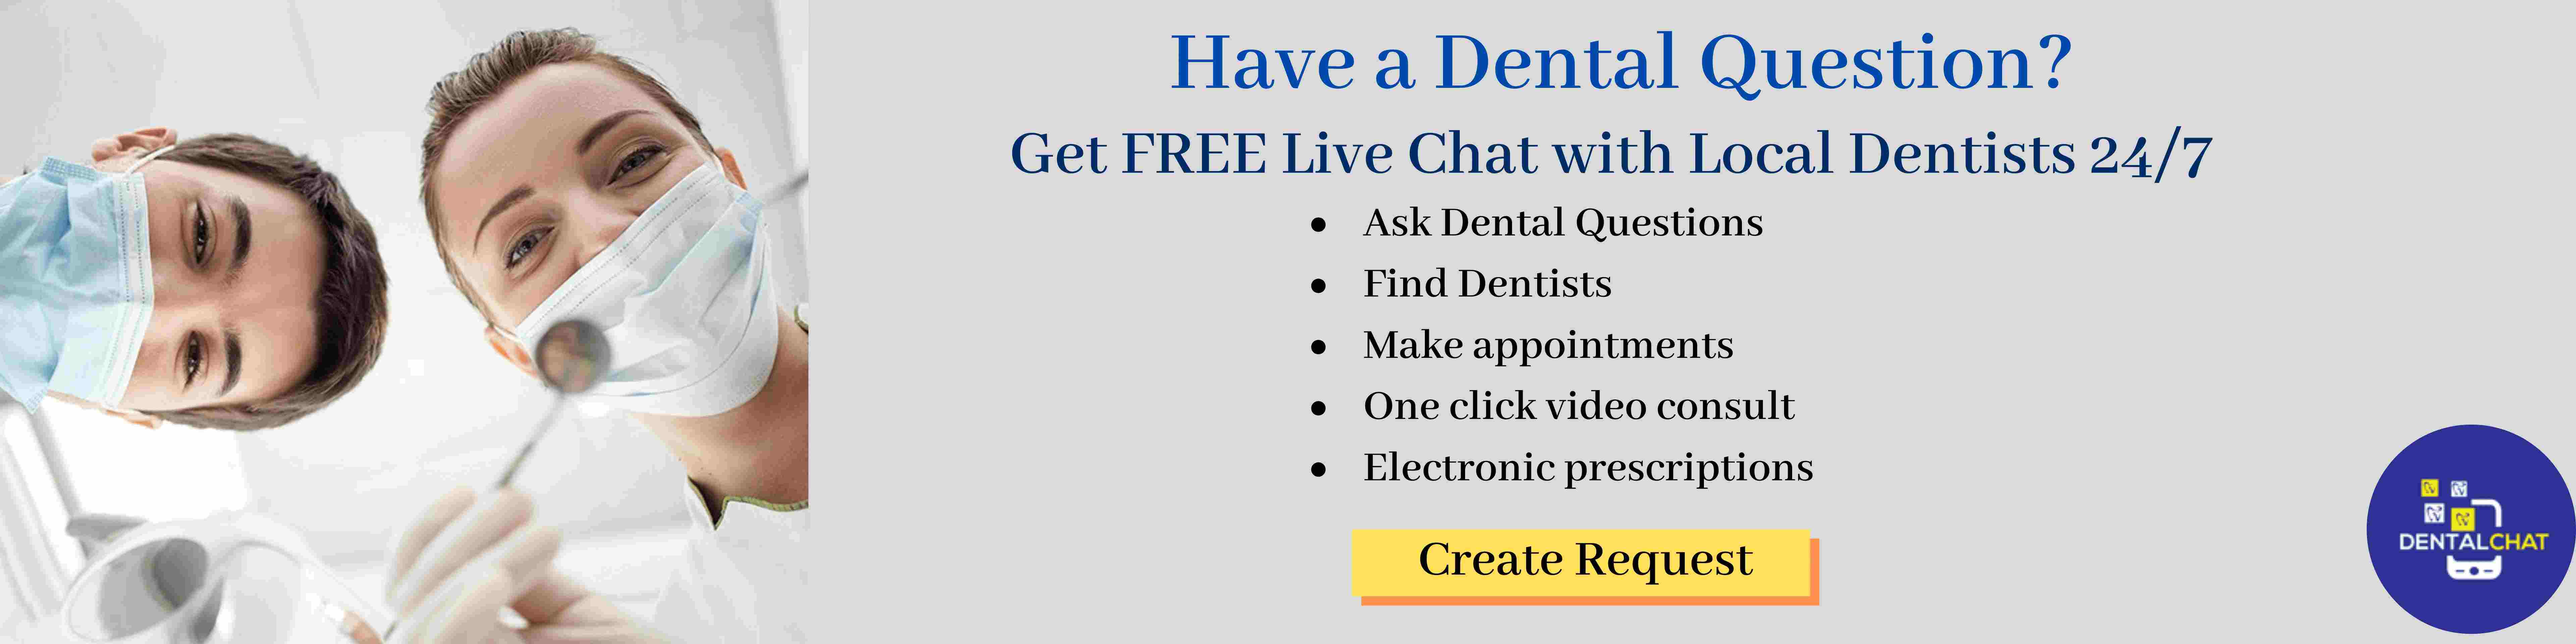 Dental Bone Grafting Blogging, Dental Ridge Augmentation Chat, Dental Bone Graft Chatting